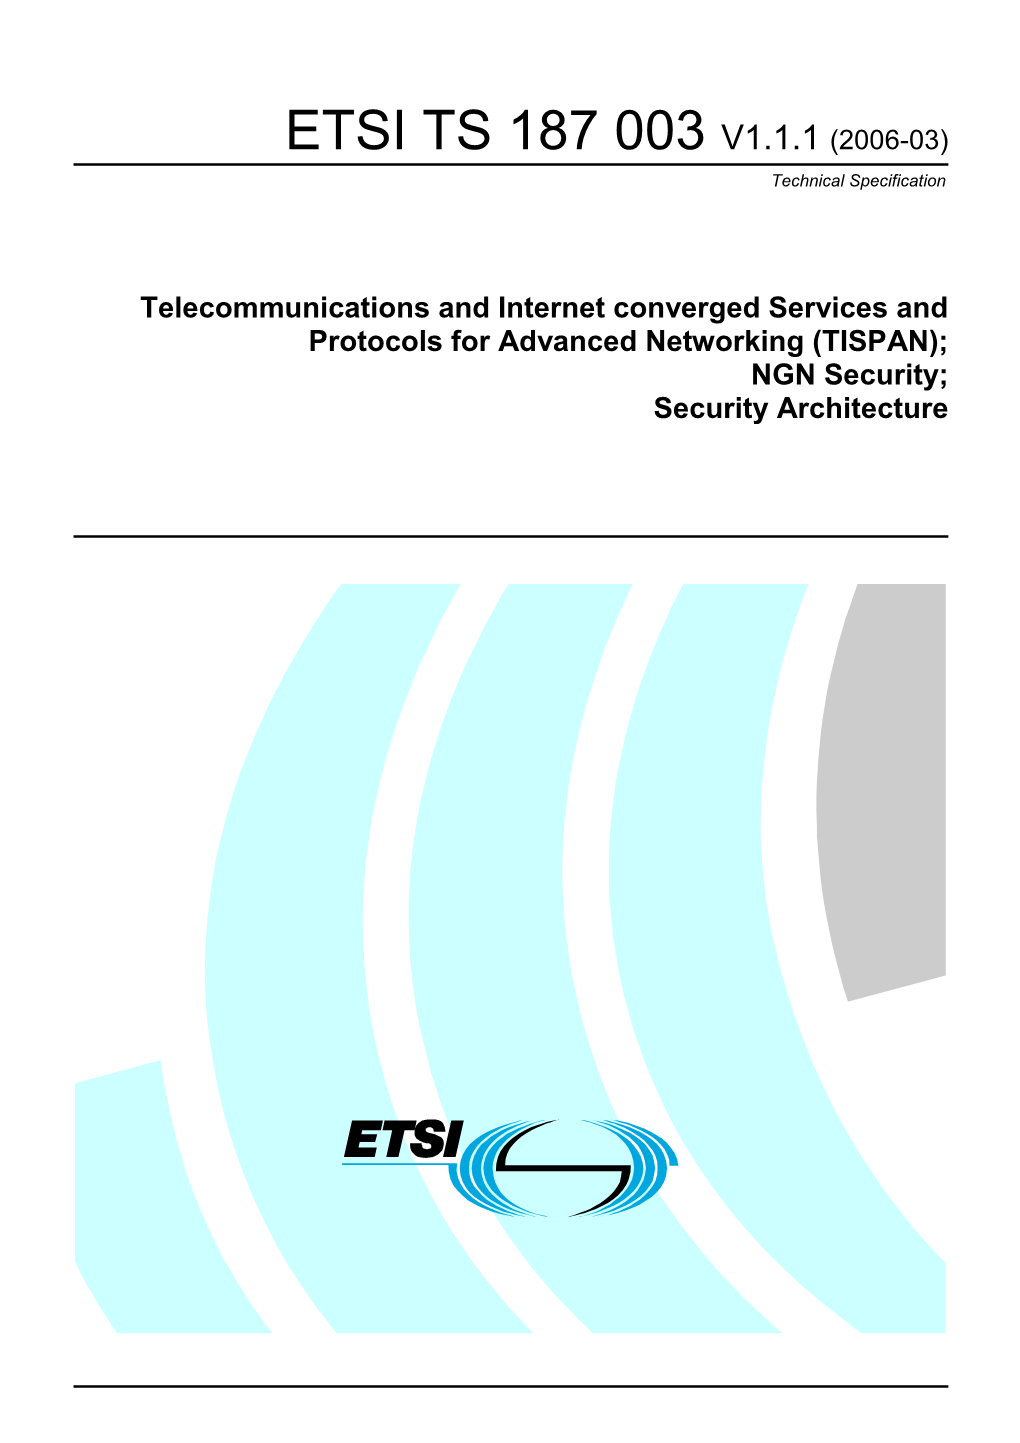 TS 187 003 V1.1.1 (2006-03) Technical Specification